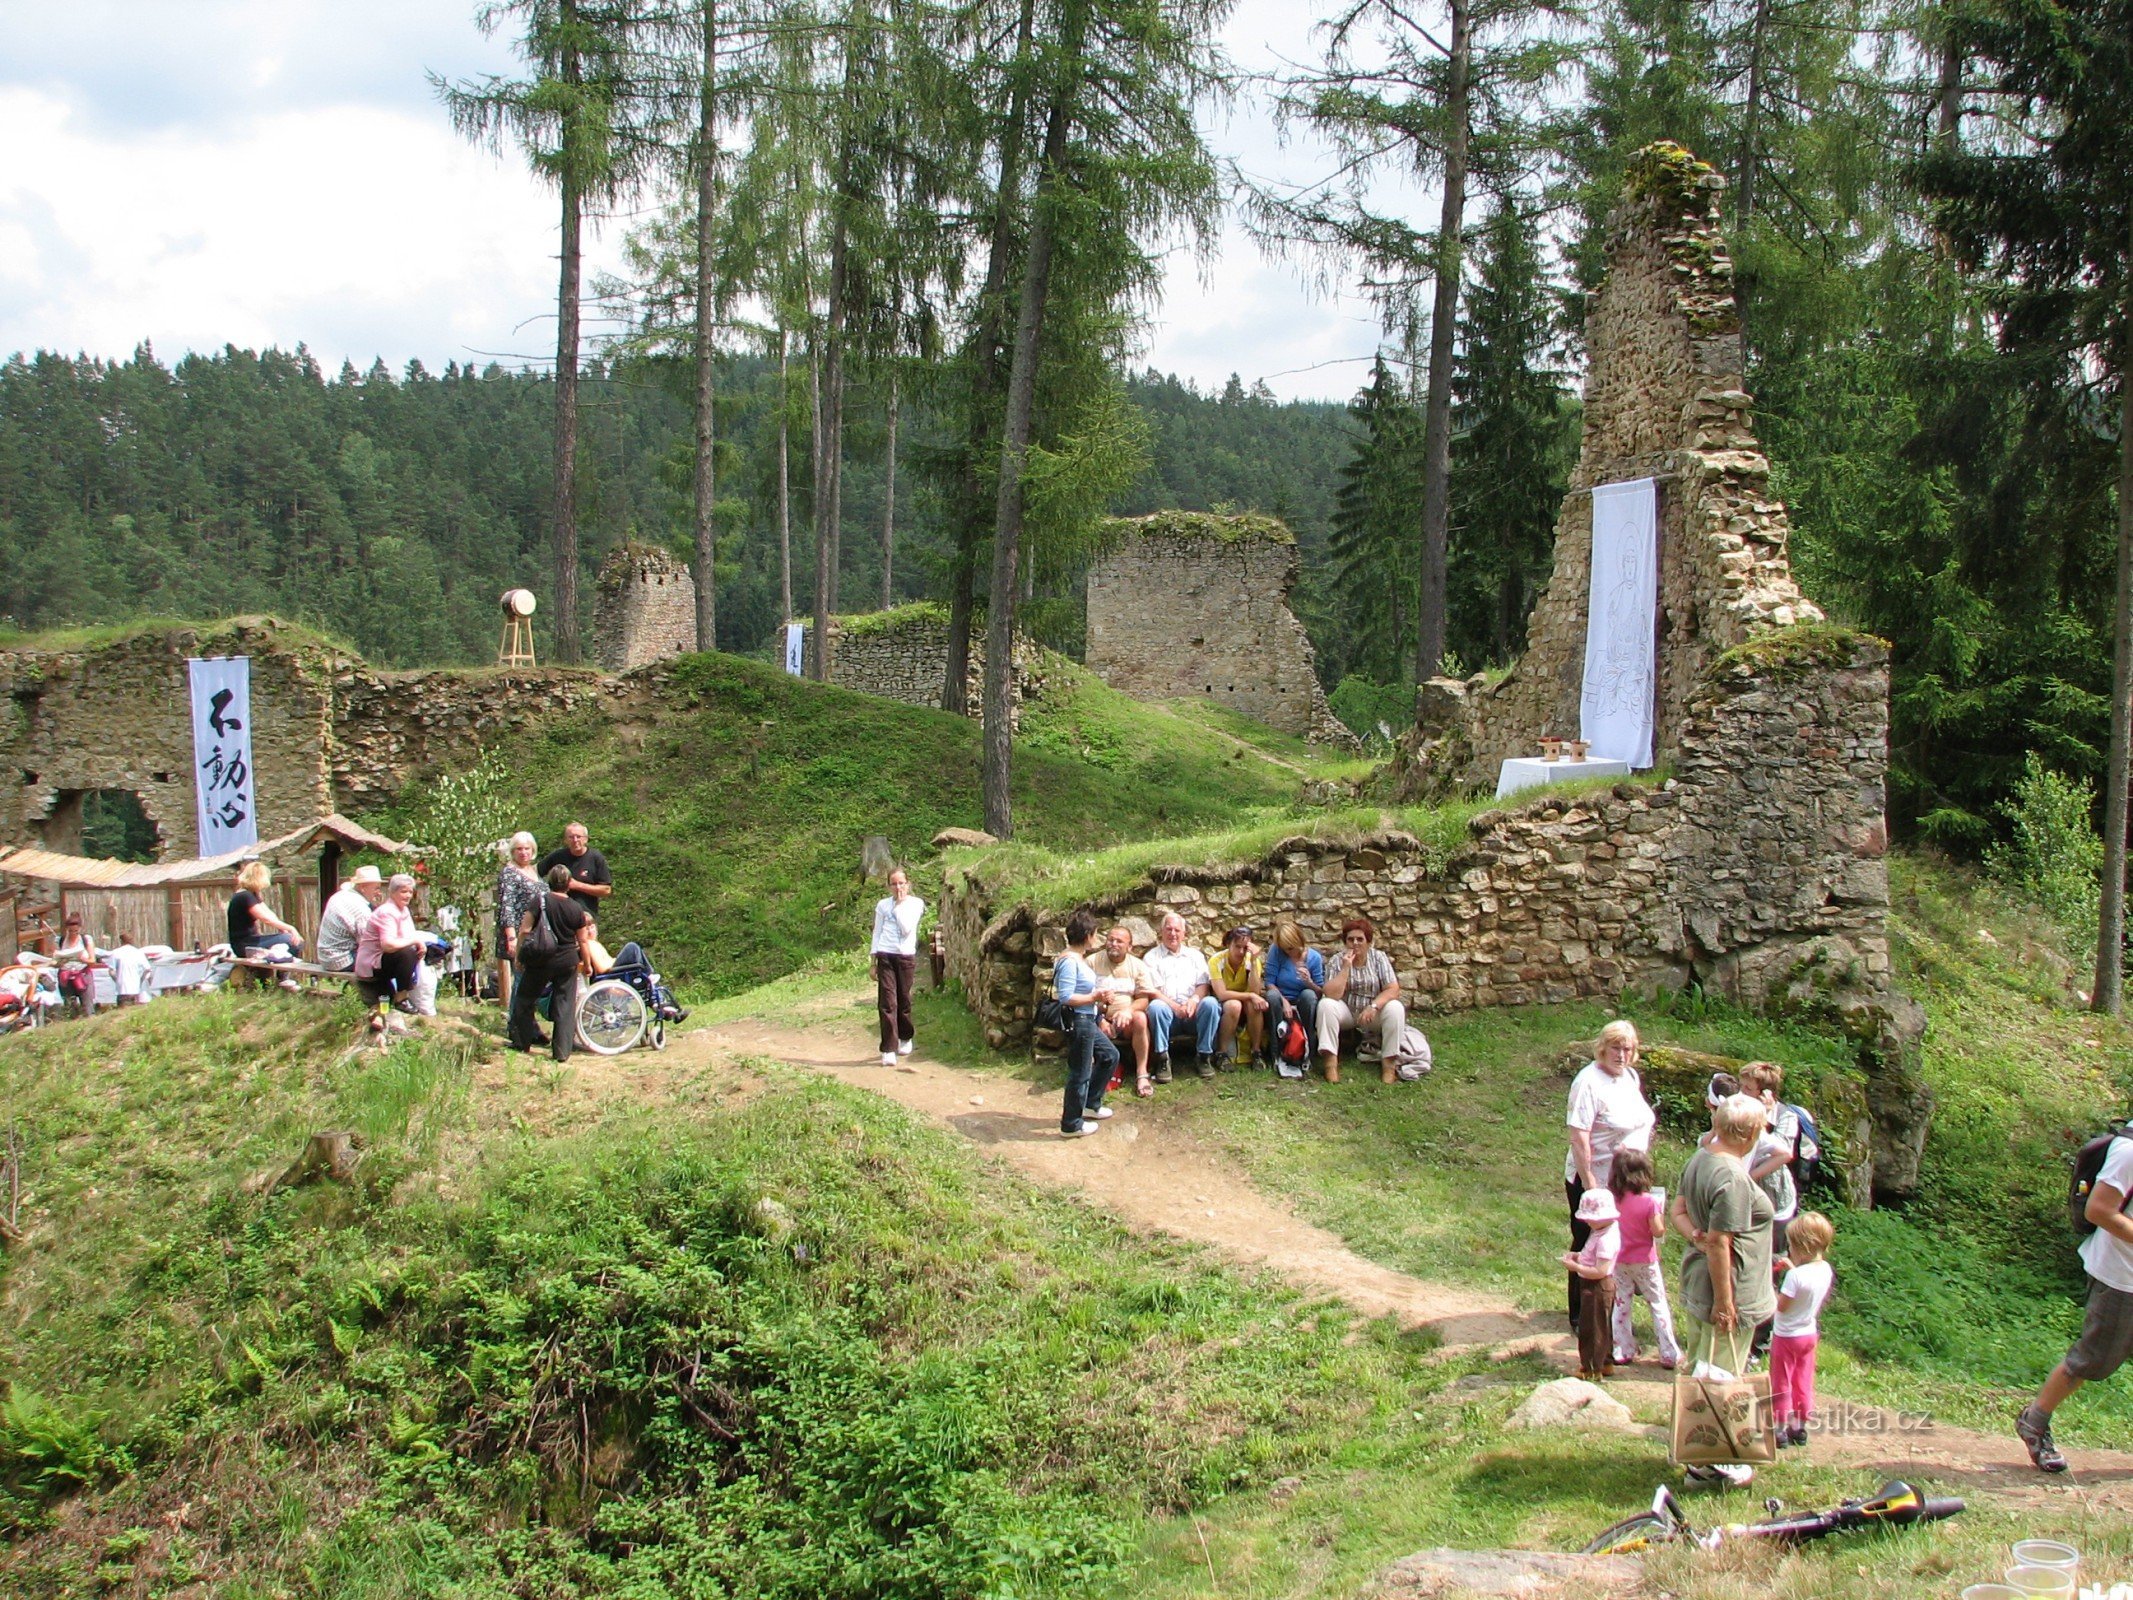 Pořešín slott - upplev medeltiden själv